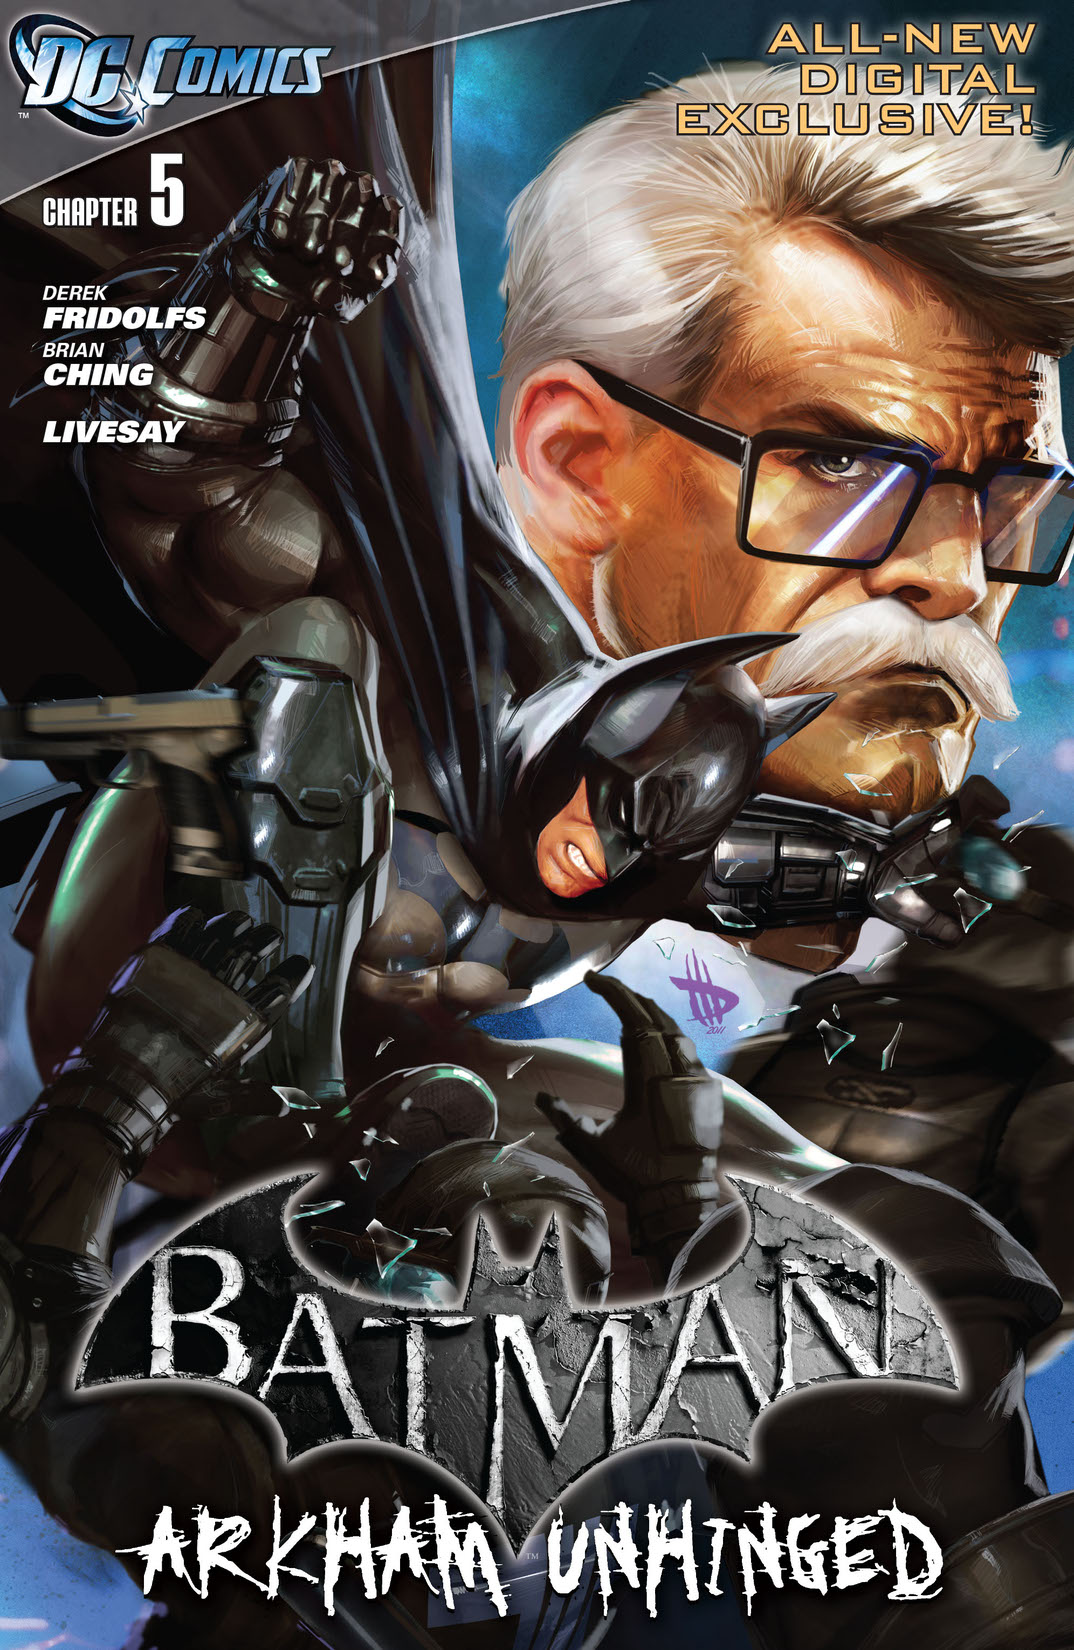 Batman: Arkham Unhinged #5 preview images